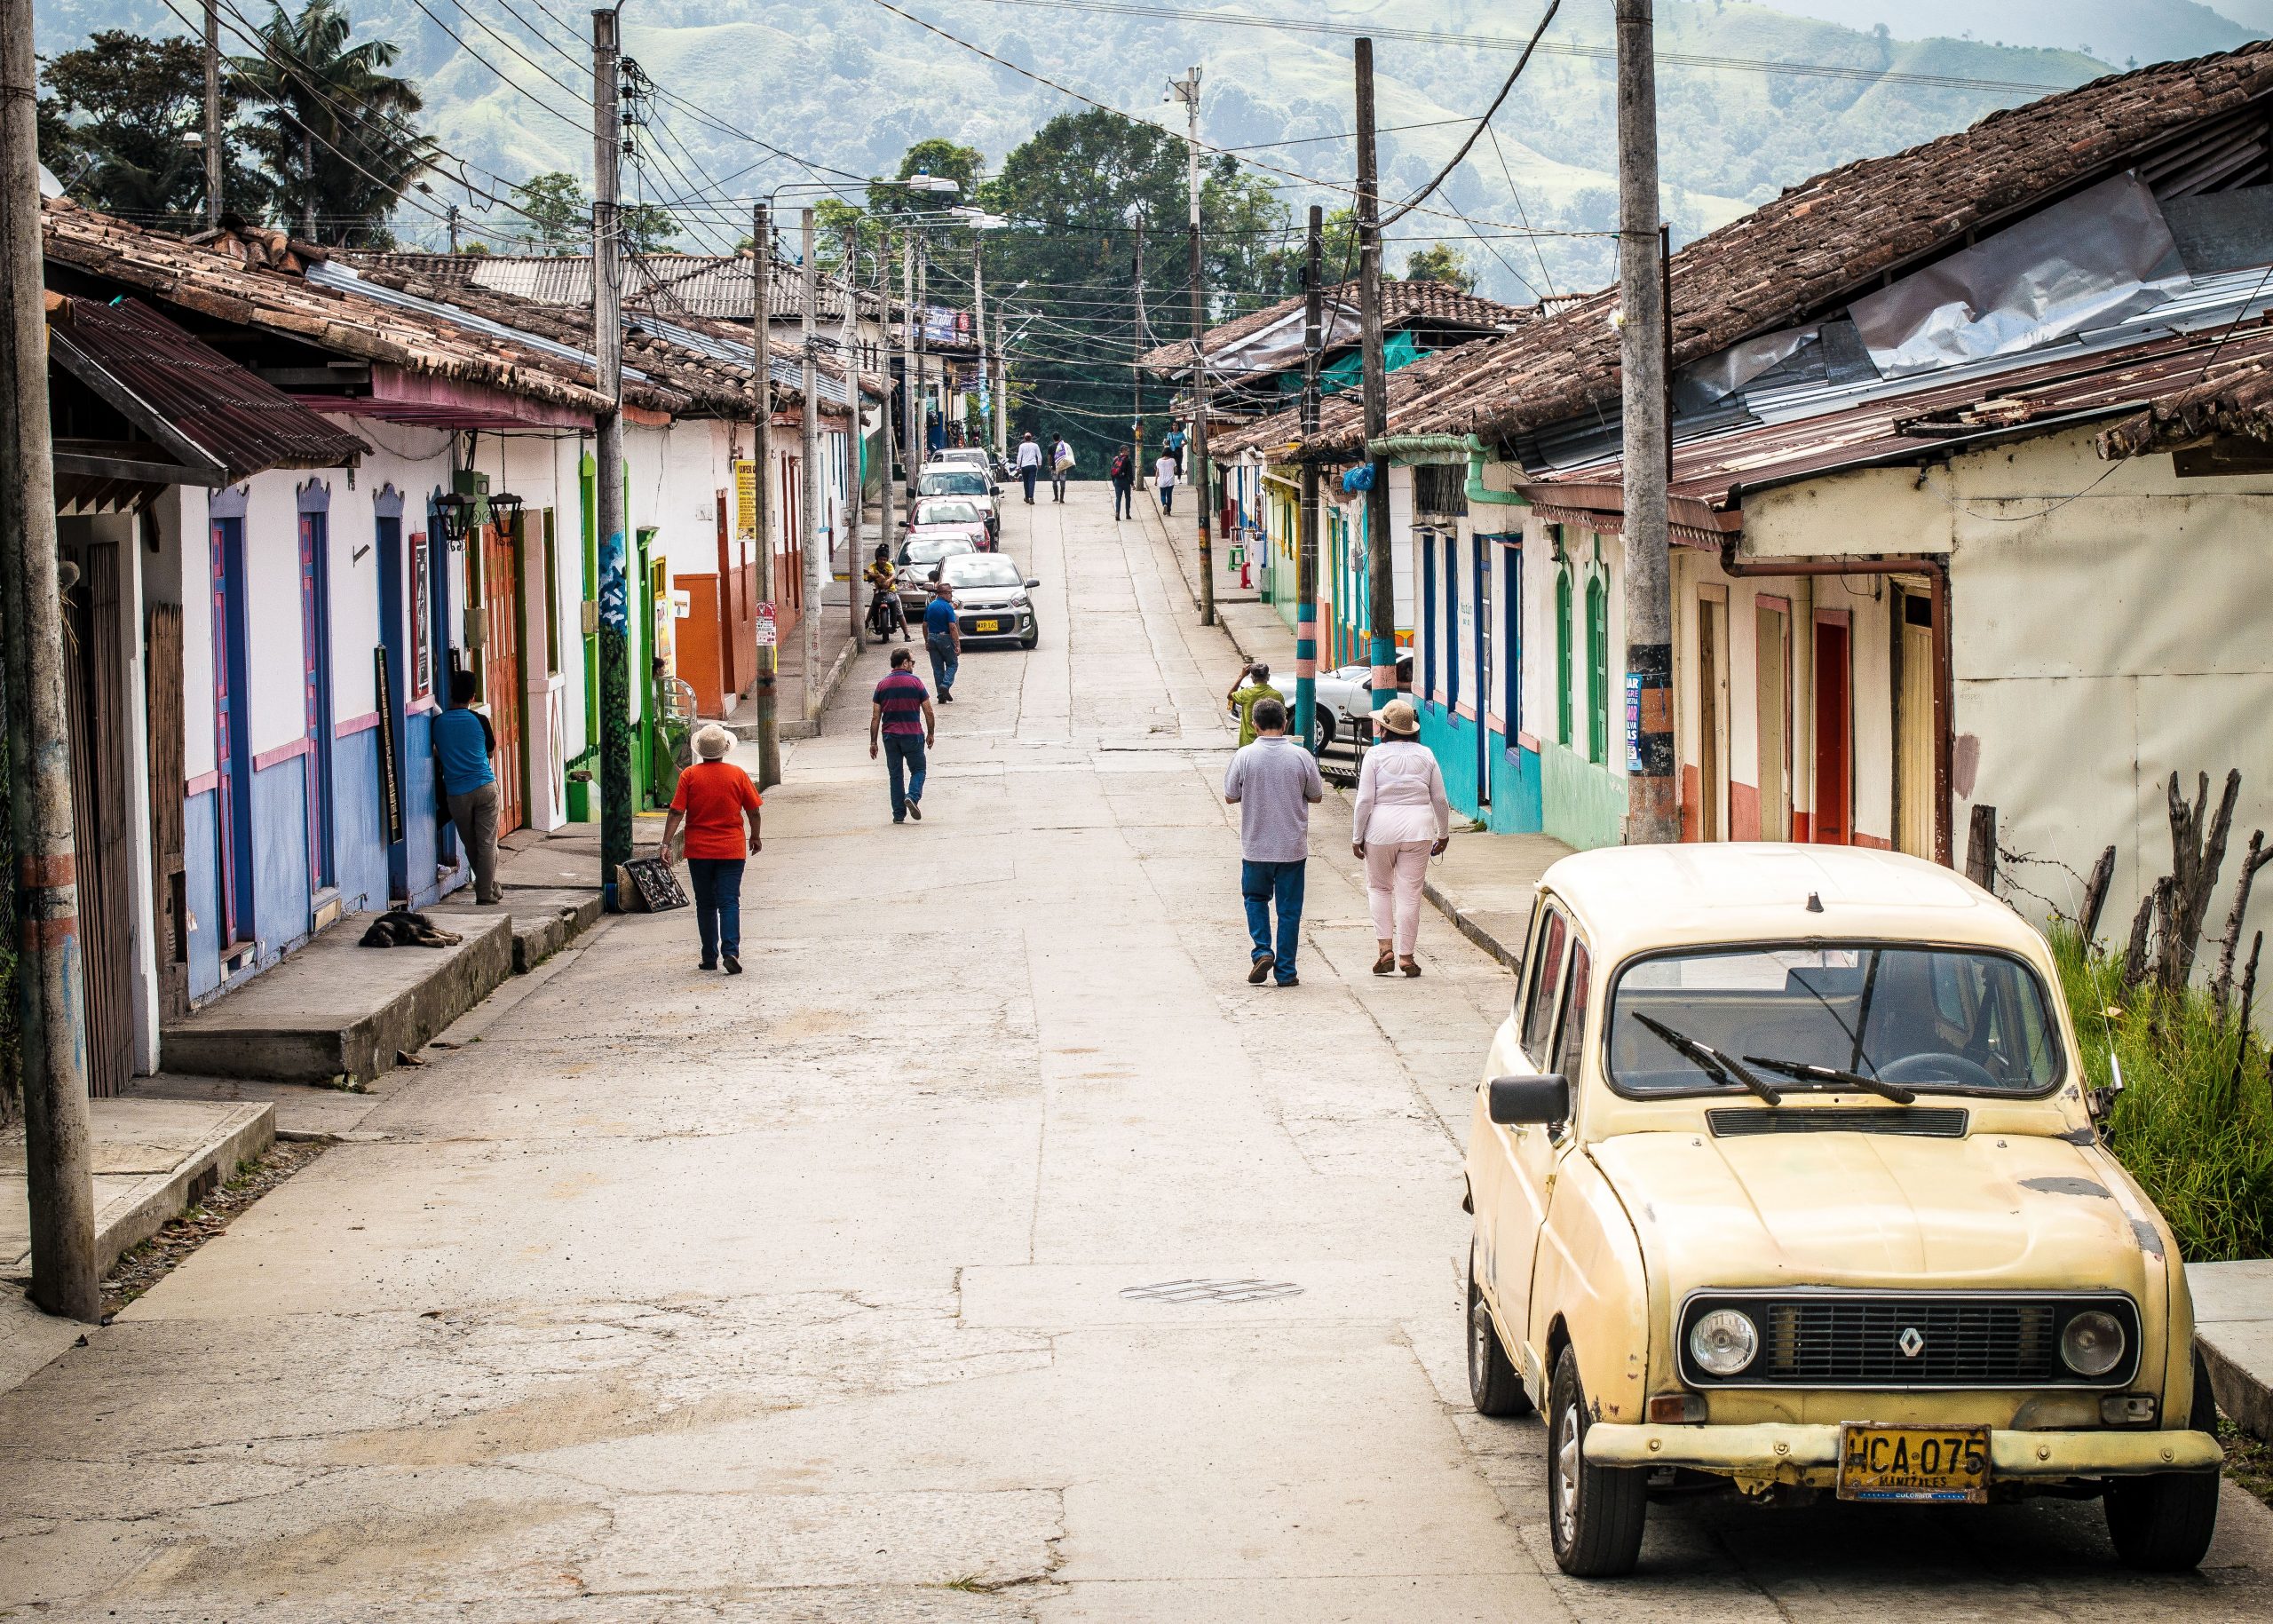 Salento, Colombia (Photo by Delaney Turner on Unsplash)